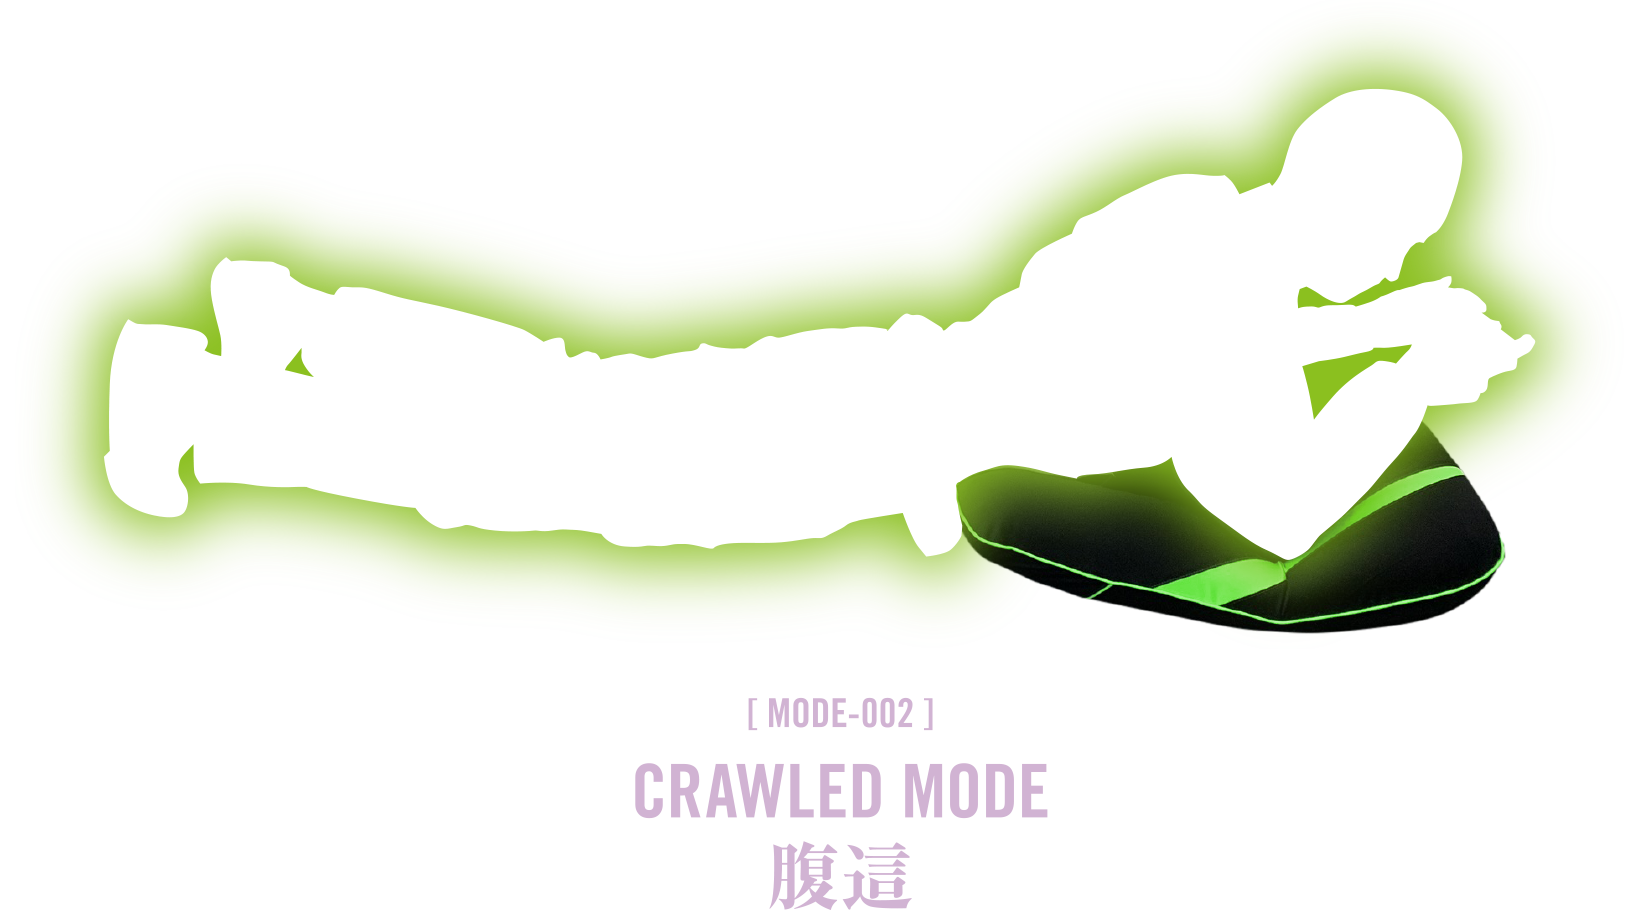 MODE-002 CRAWLED MODE 腹這